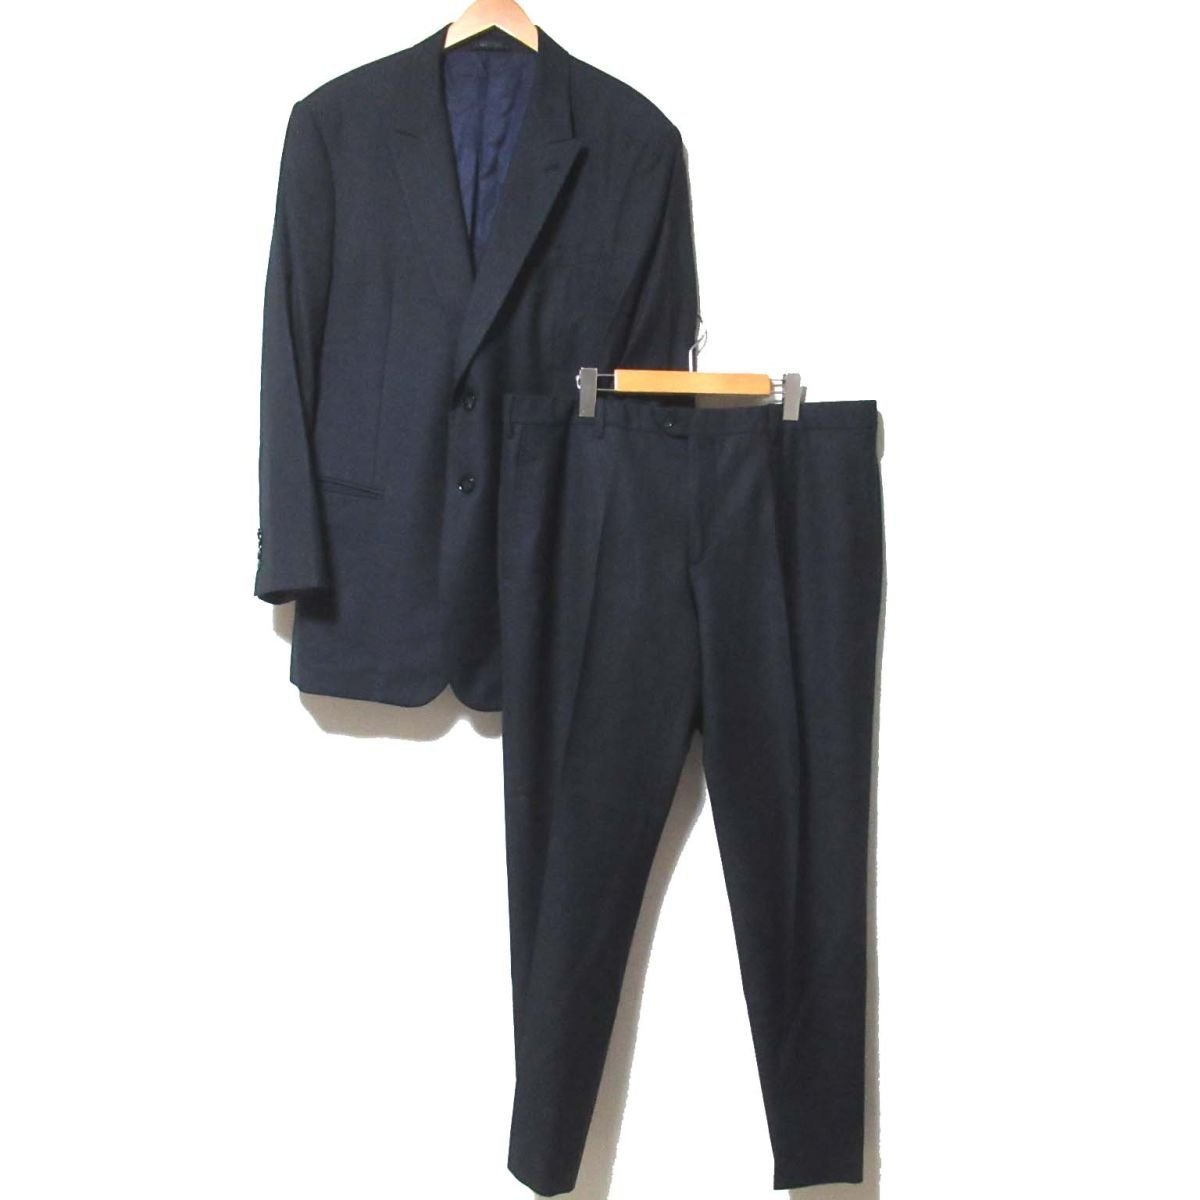  beautiful goods GIORGIO ARMANIjoru geo Armani TRADER BLU tailored jacket + slacks pants suit setup 58R navy 